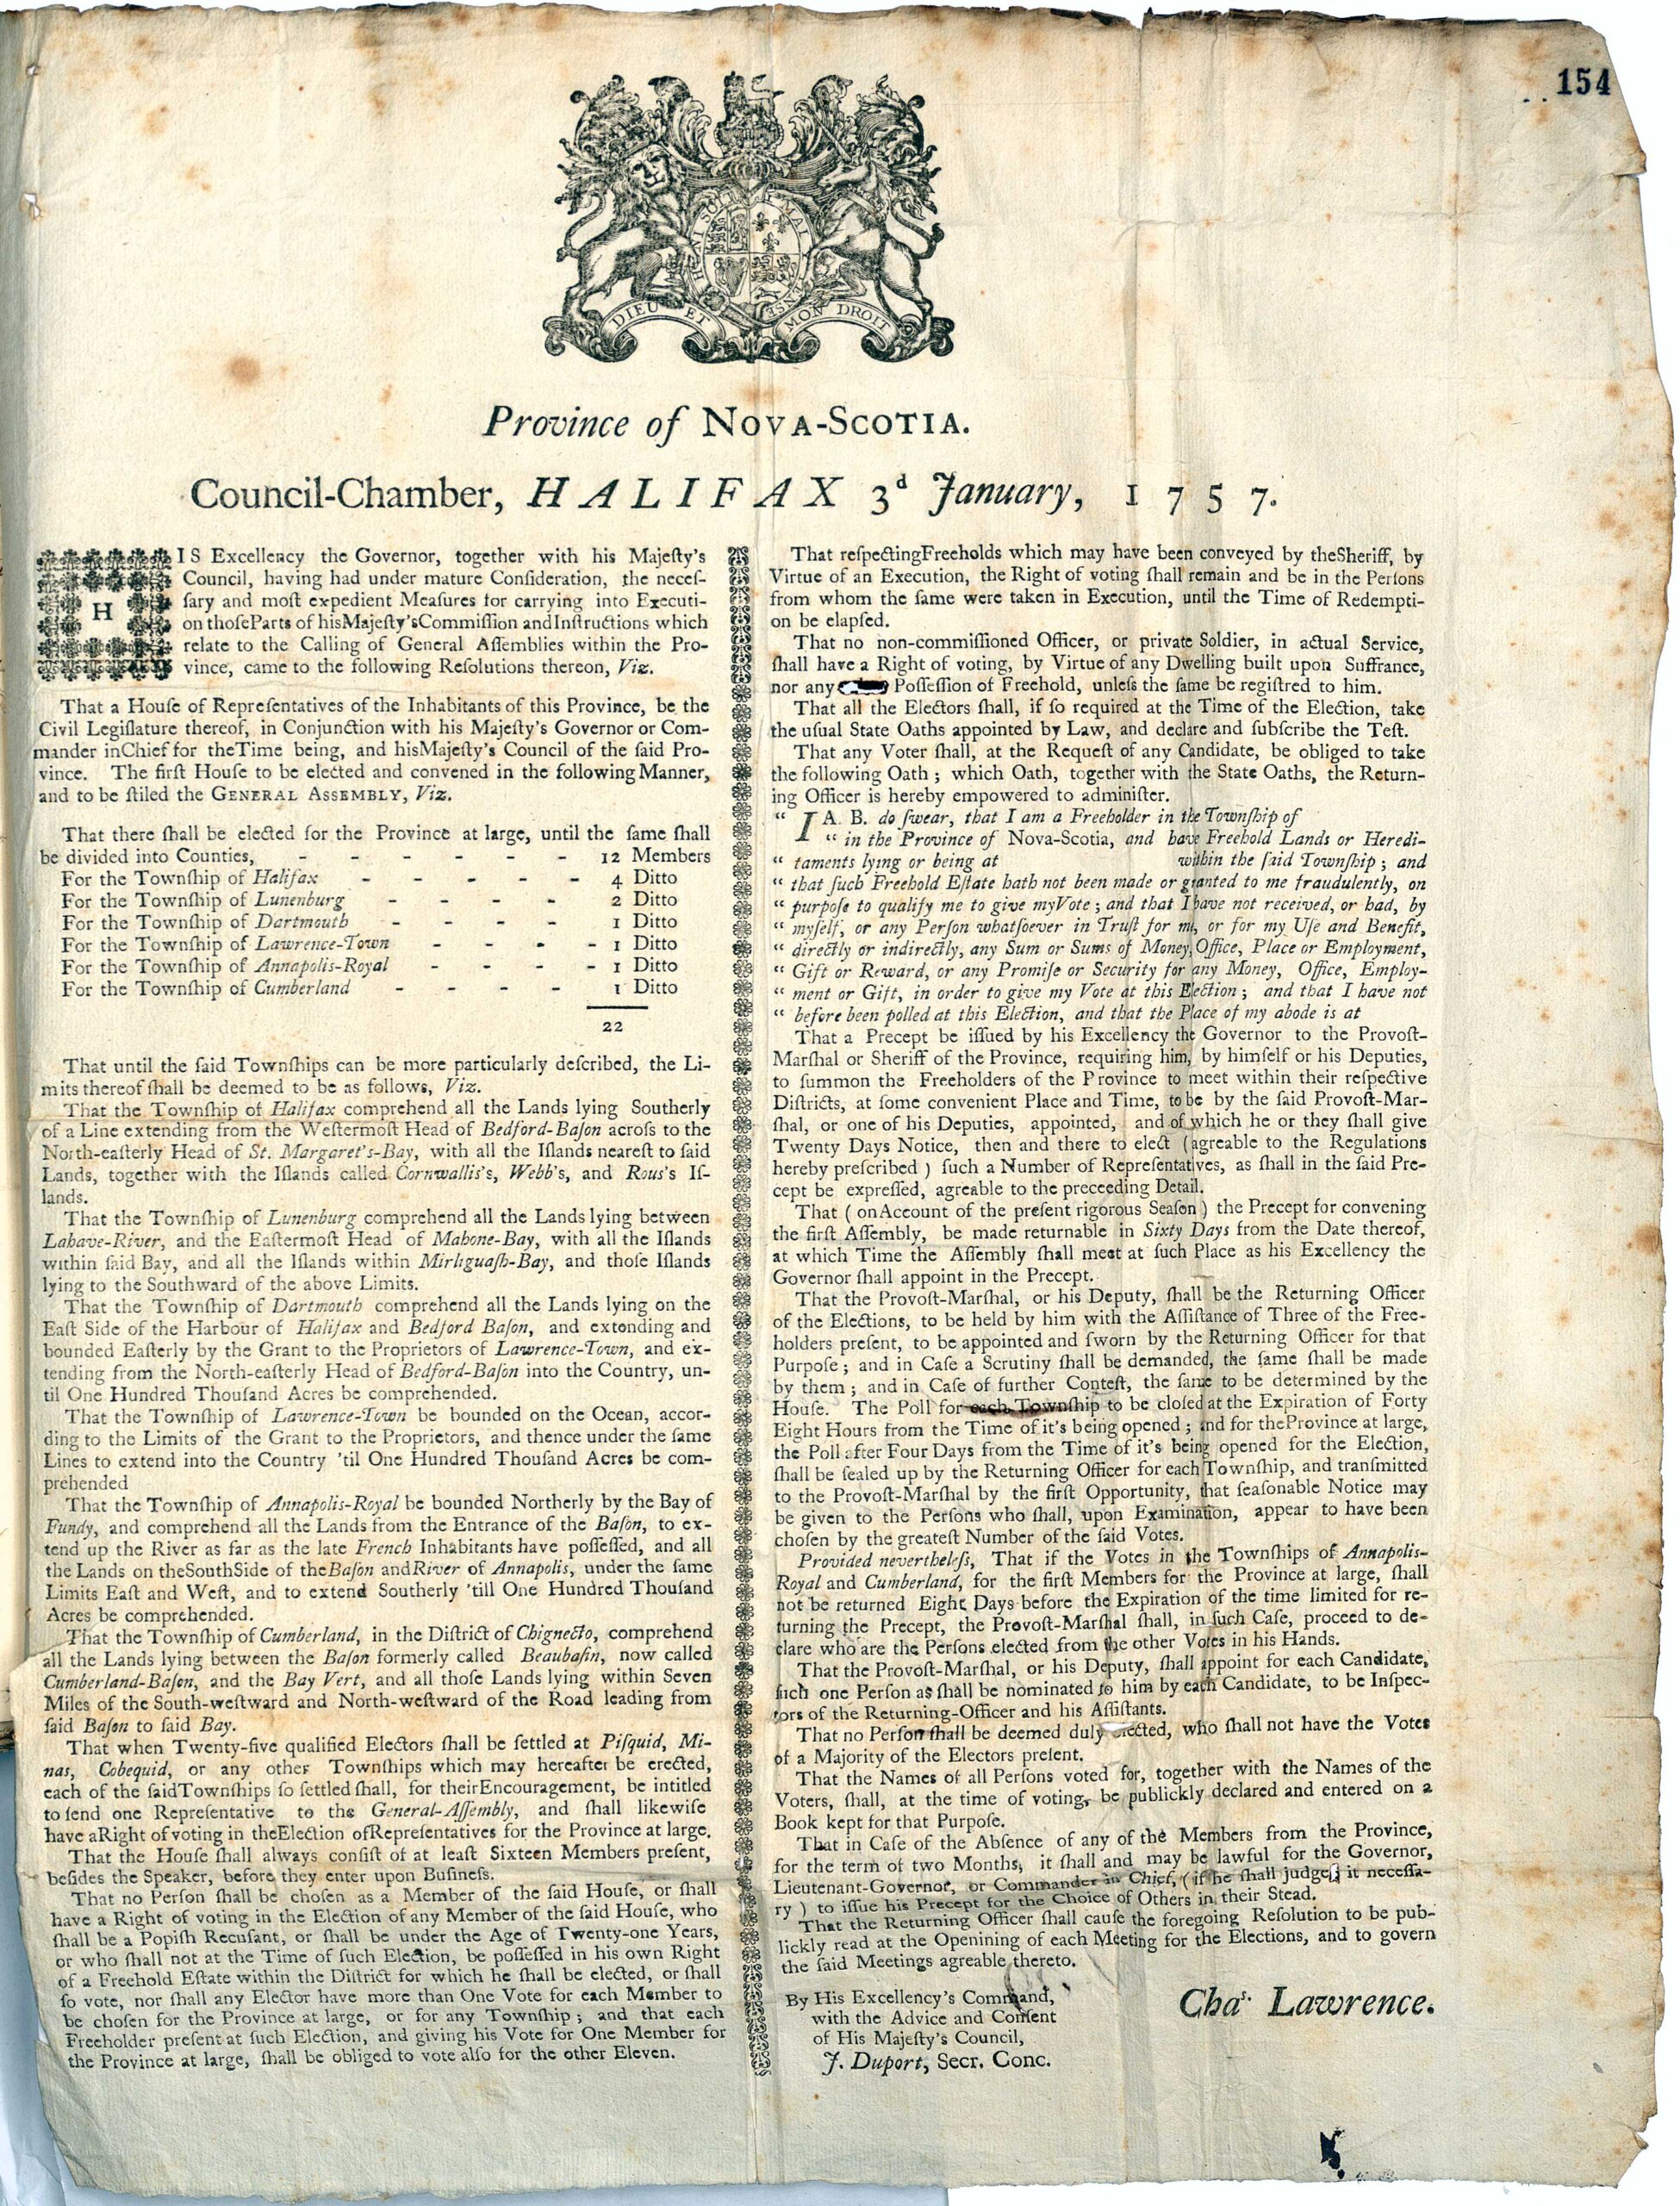 1757 Proclamation